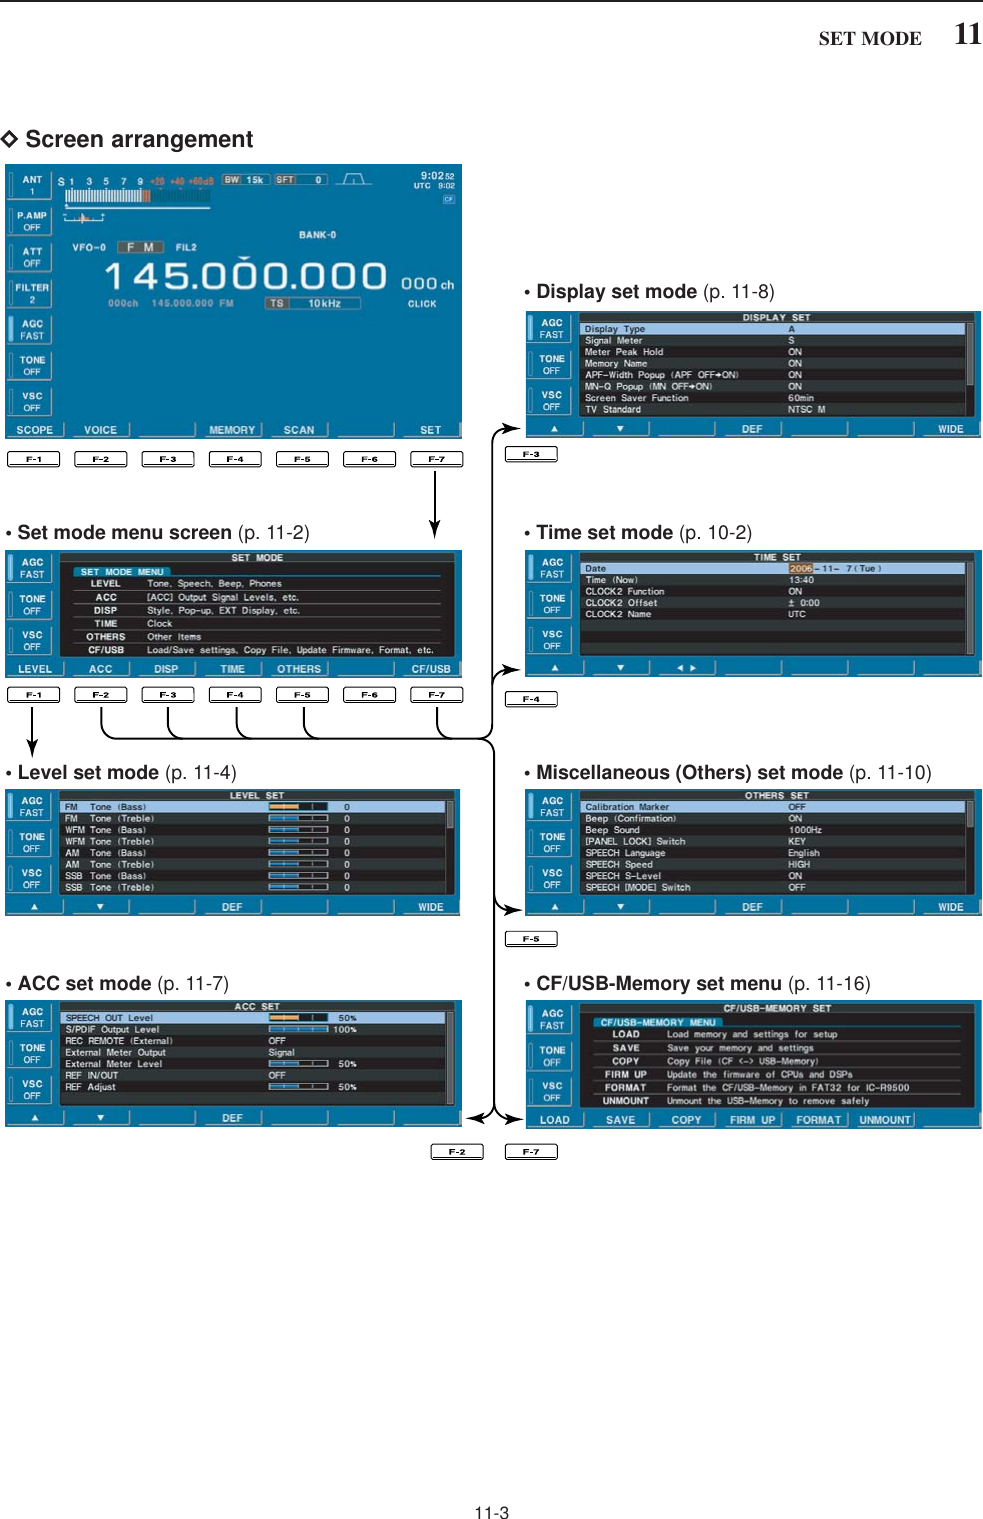 11-311SET MODEDScreen arrangement• Set mode menu screen (p. 11-2)• Level set mode (p. 11-4)• ACC set mode (p. 11-7)• Time set mode (p. 10-2)• Display set mode (p. 11-8)• Miscellaneous (Others) set mode (p. 11-10)• CF/USB-Memory set menu (p. 11-16)